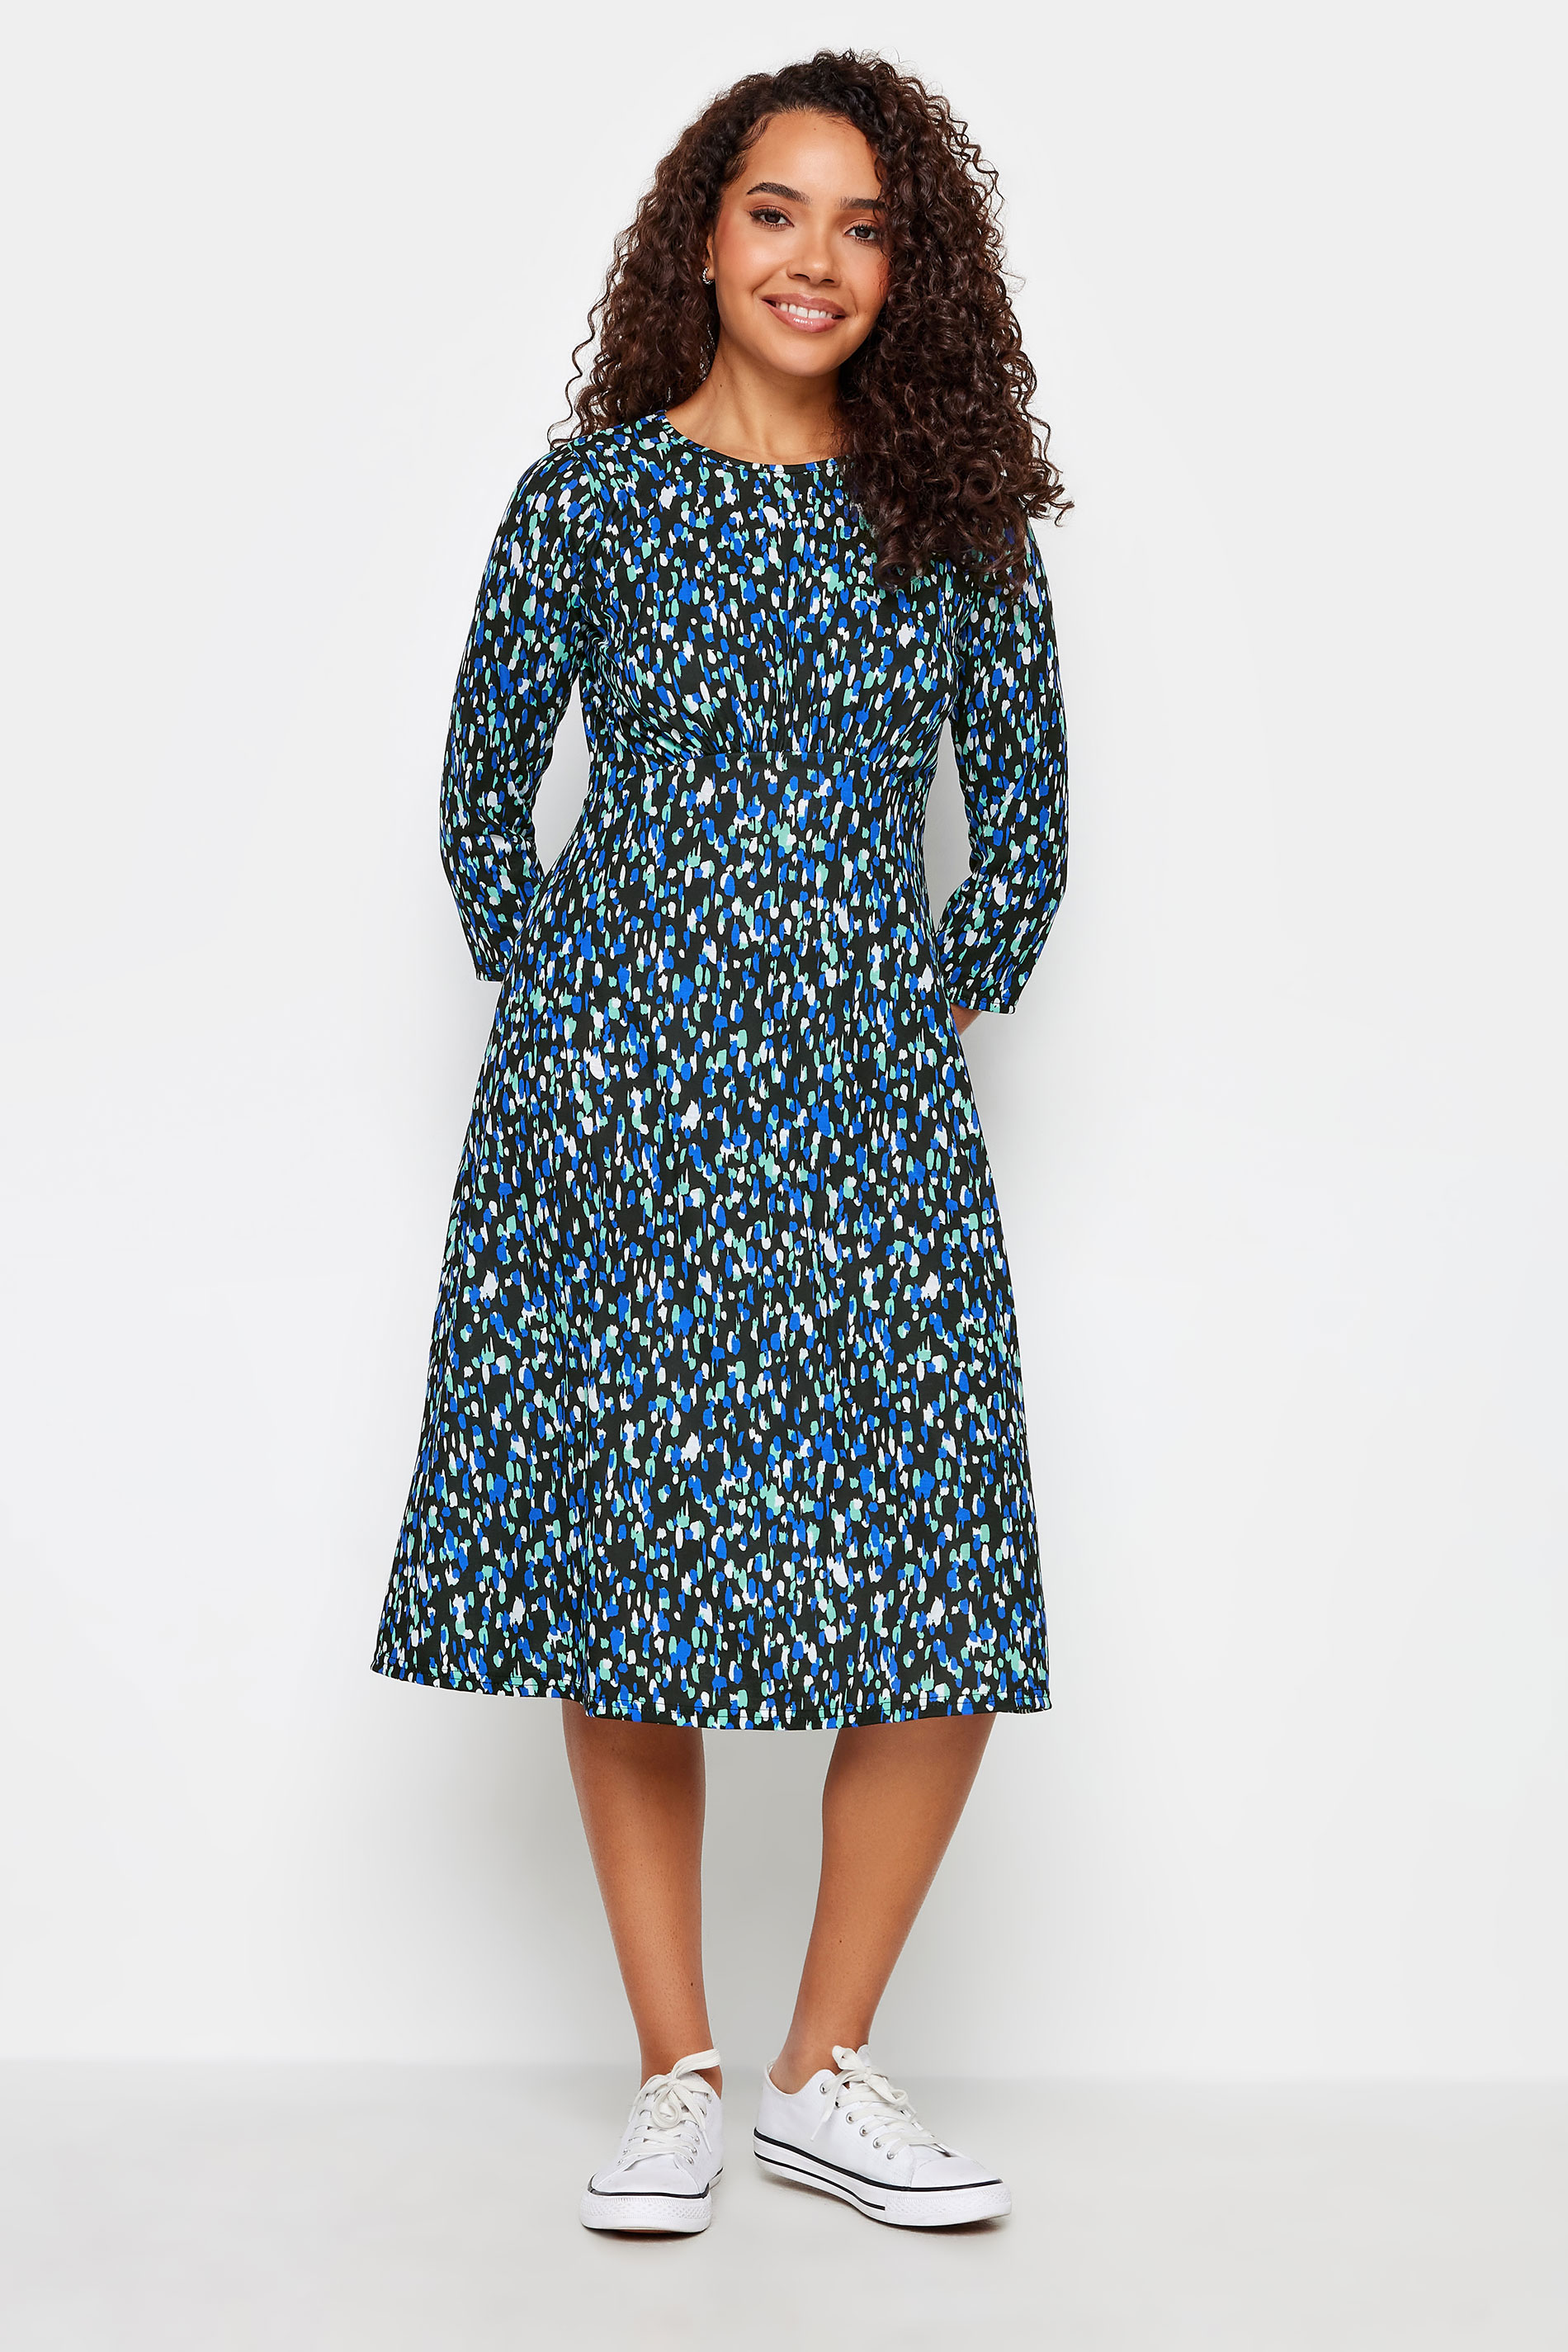 M&Co Black & Blue Markings Midaxi Dress | M&Co 2